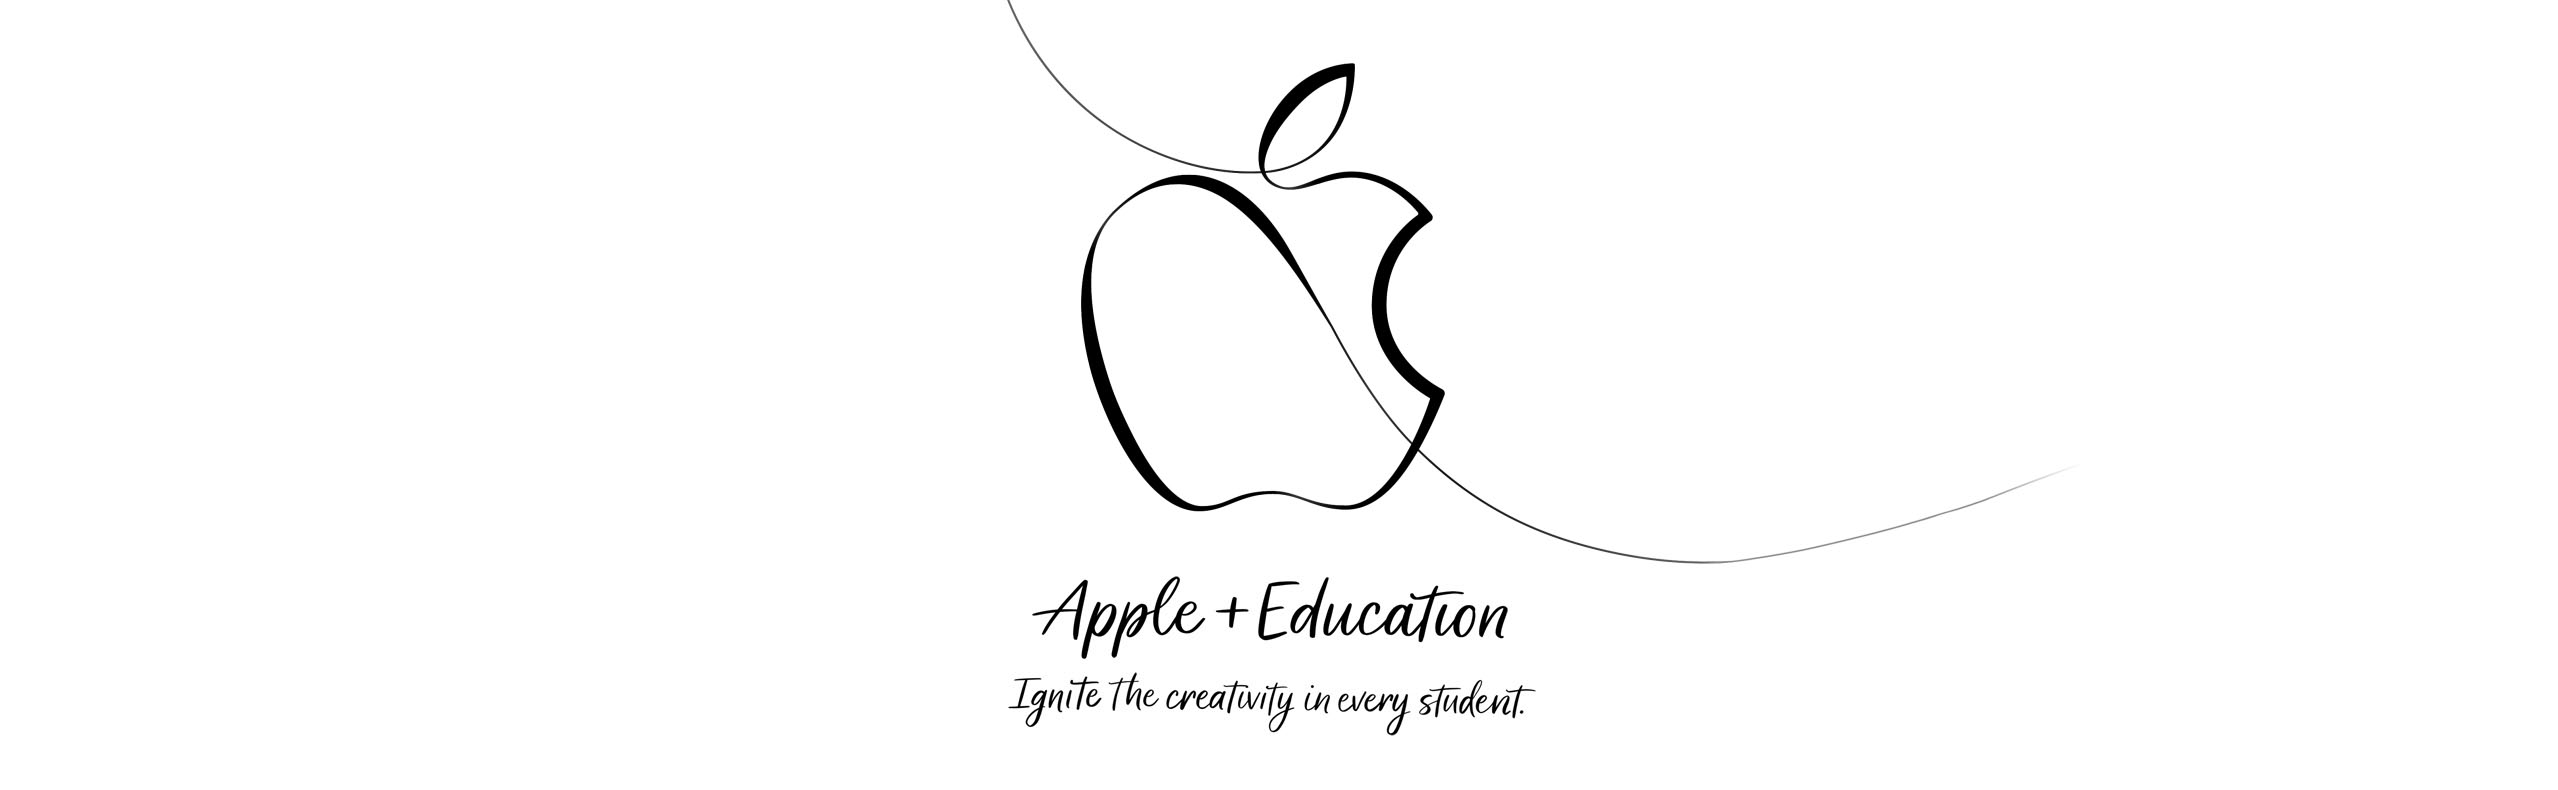 apple education event banner